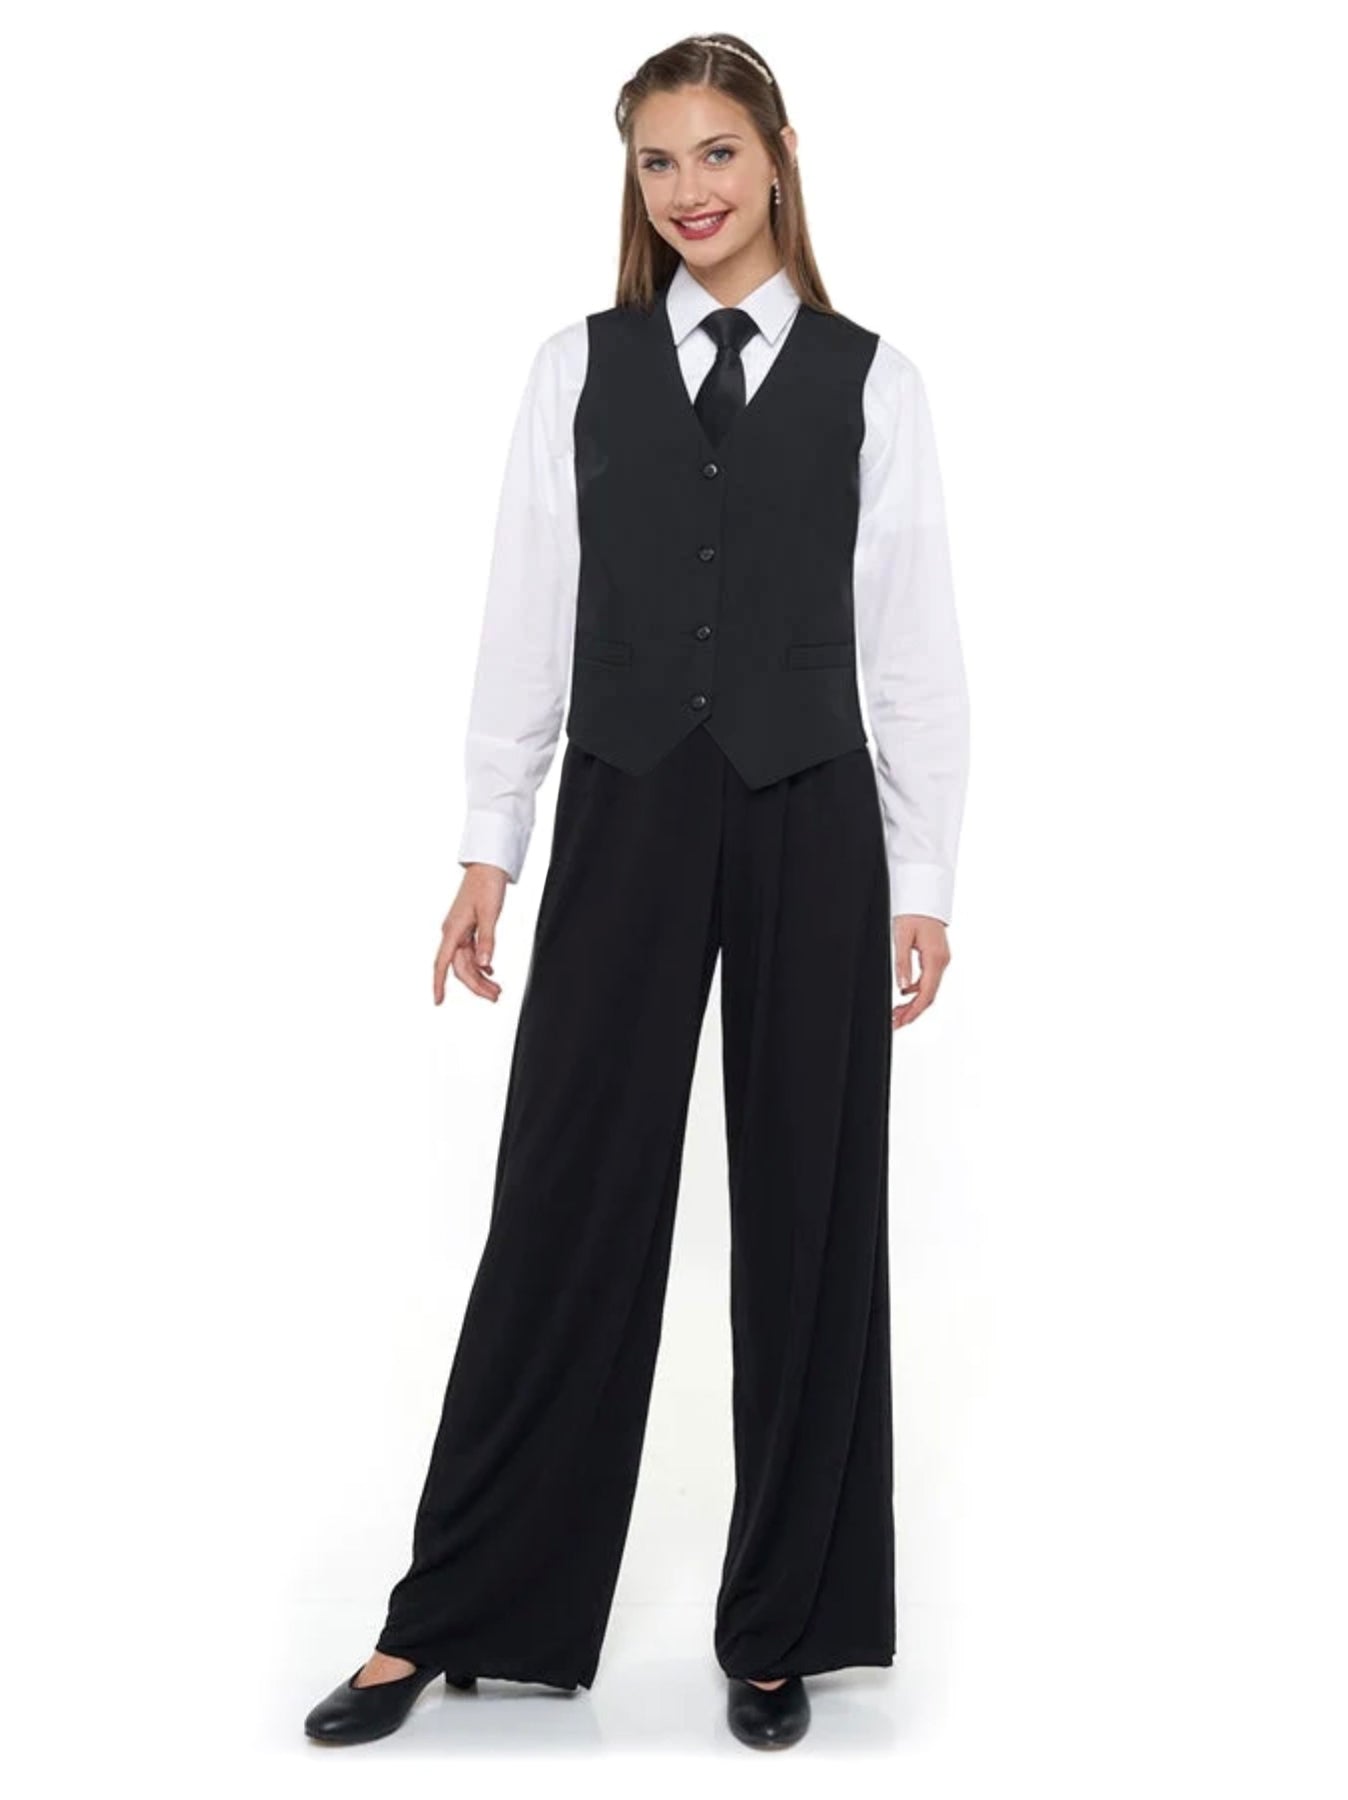 CHARLIE (Style #6705L) - Vest and Tie Ensemble Package - Ladies